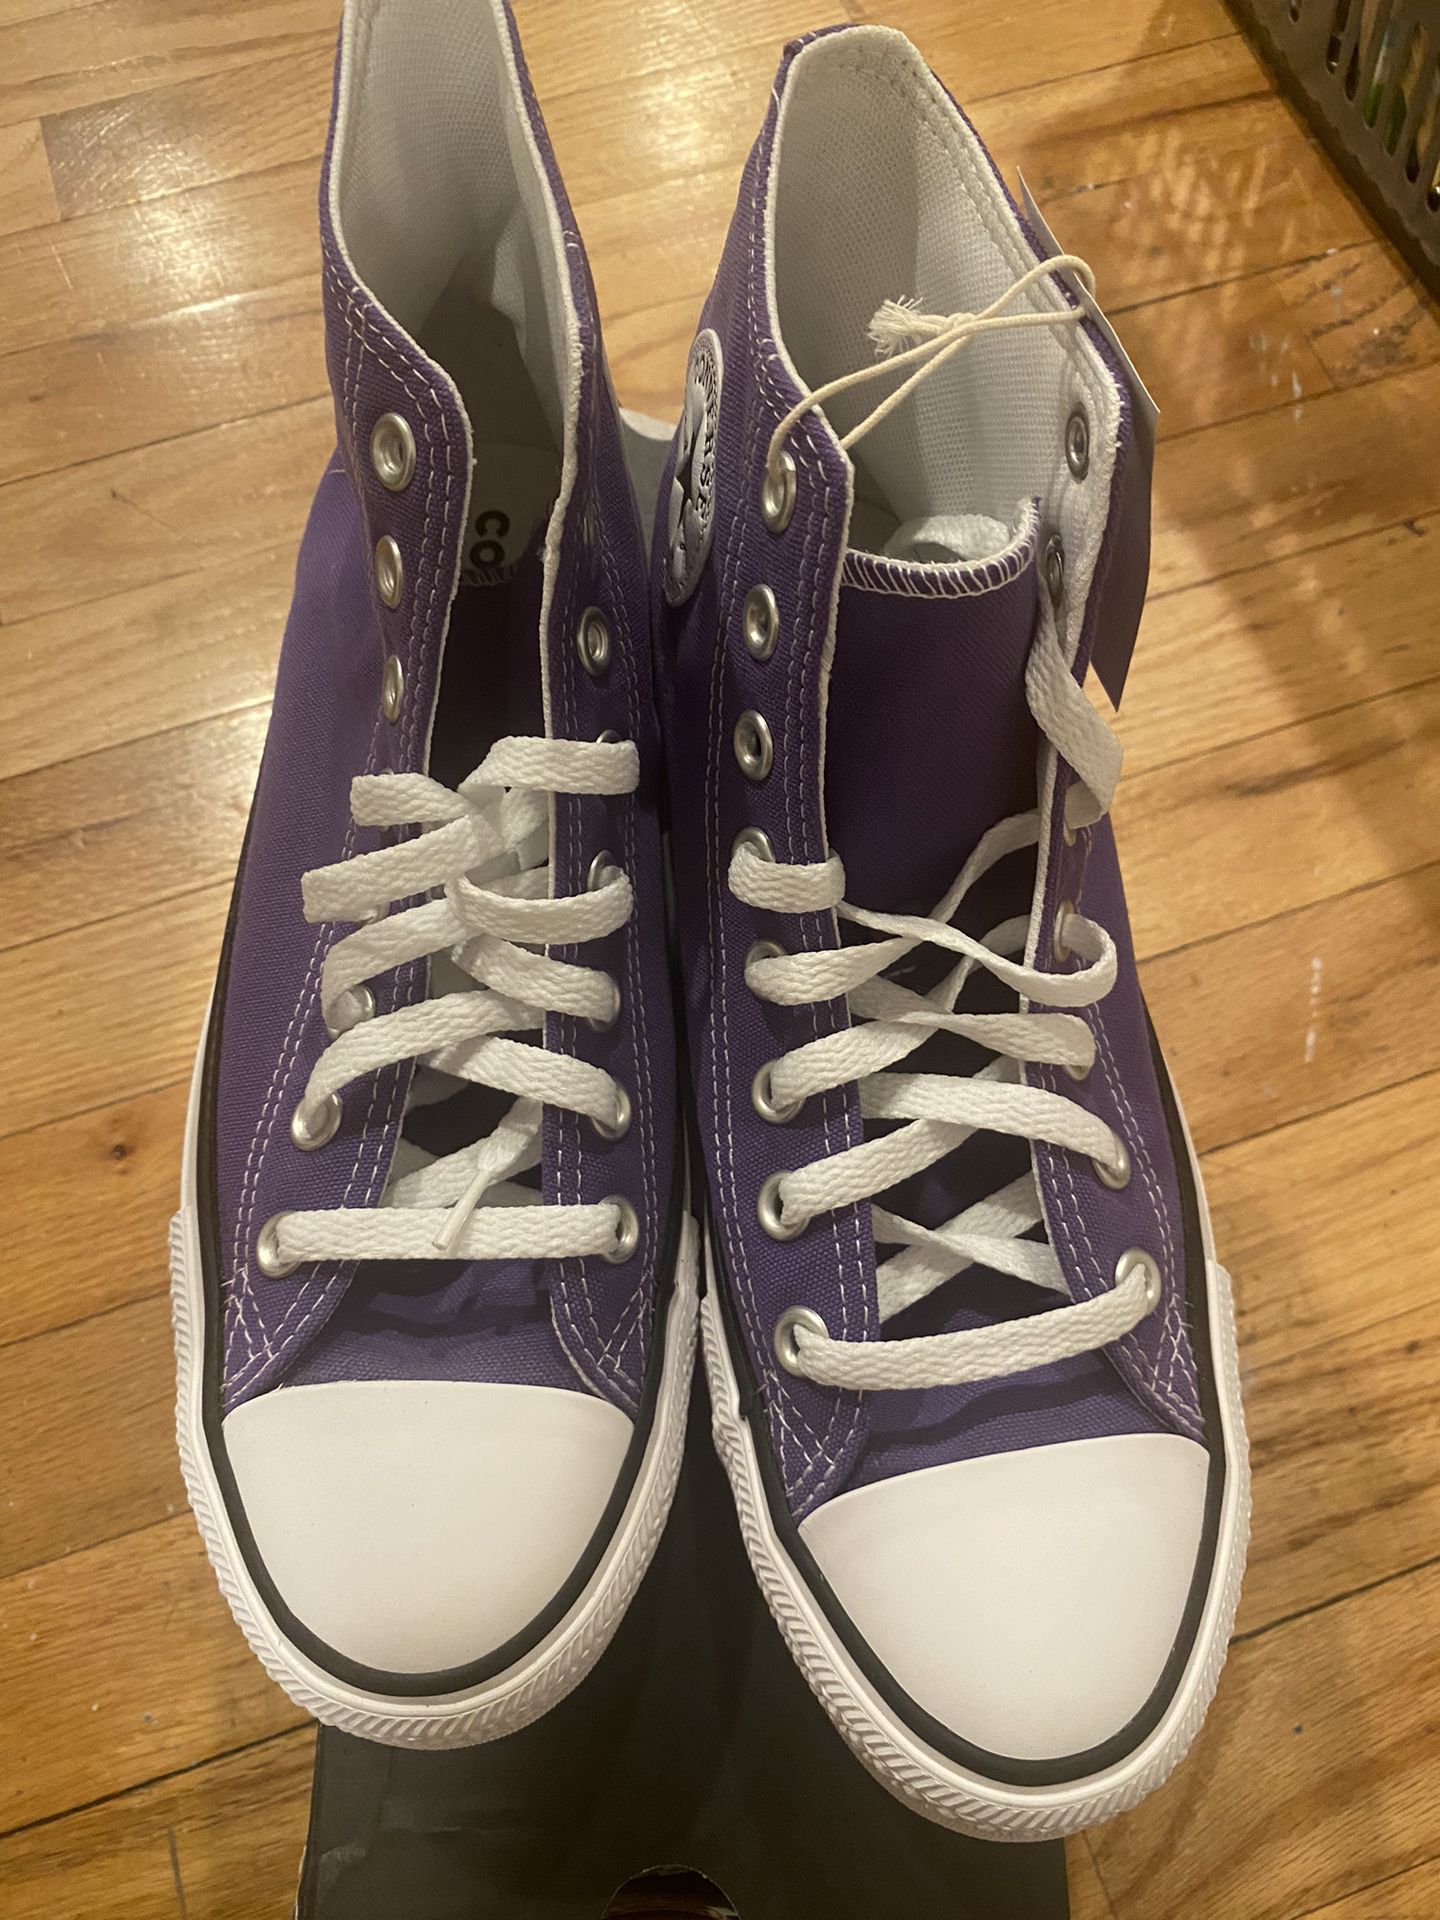 Converse Purple Size 8